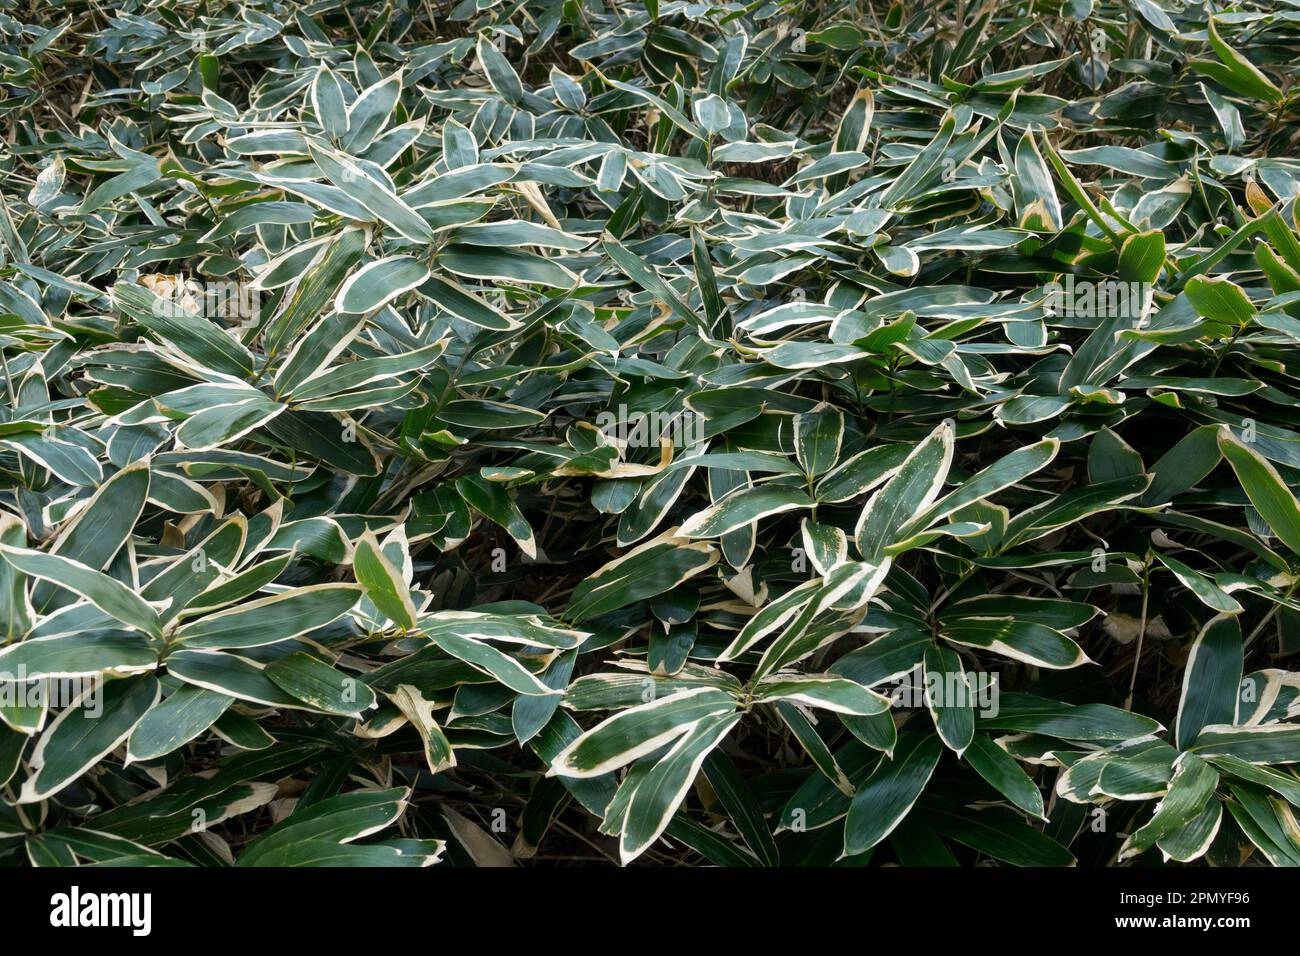 Garden, Bamboo, Sasa veitchii, Variegated leaves, Evergreen, Sasa bamboo, Hardy, Plants Stock Photo